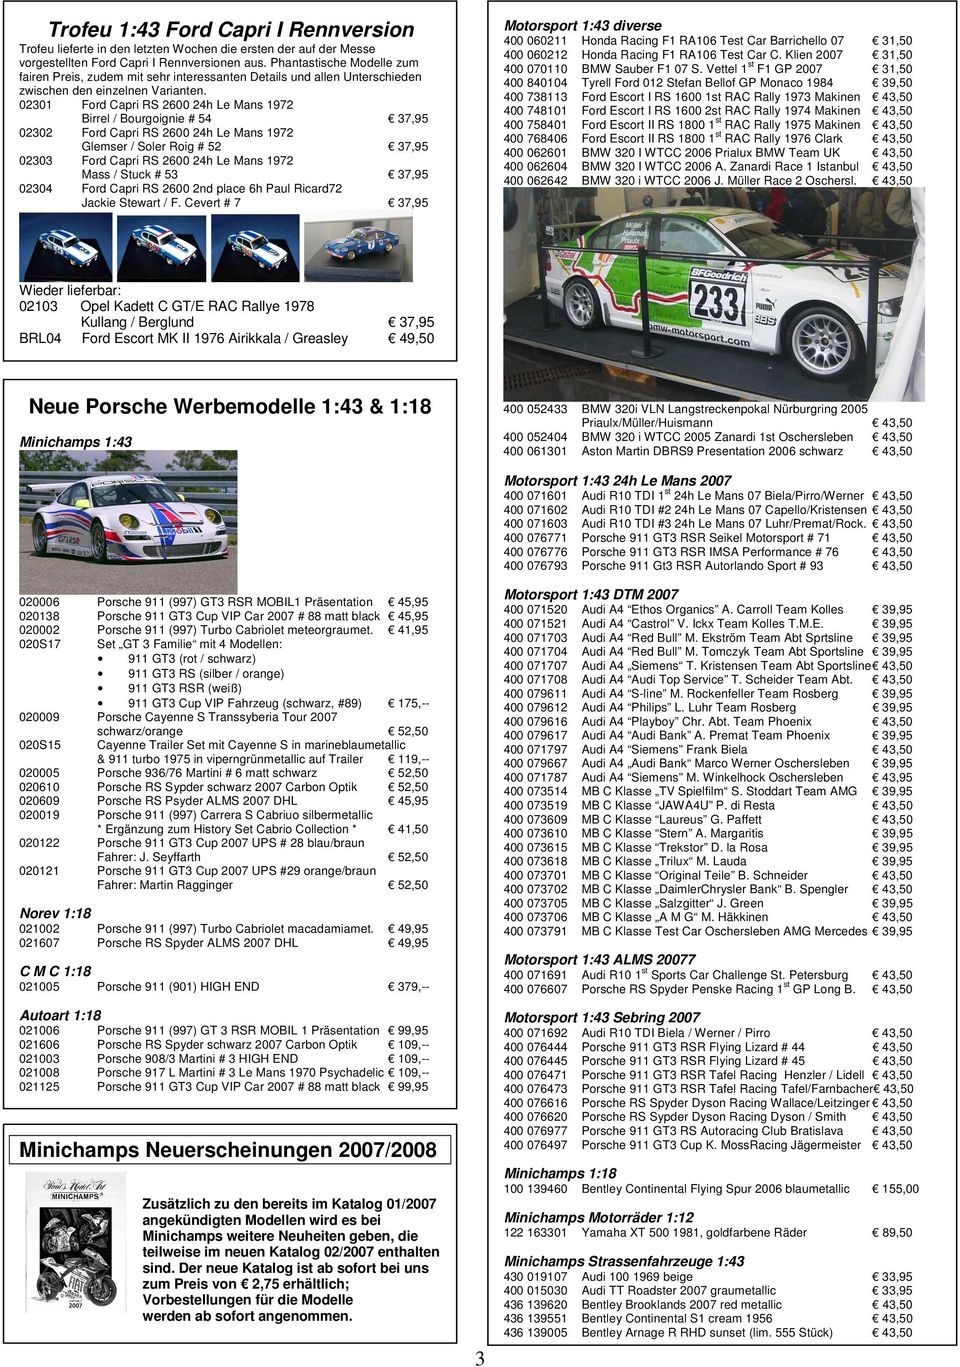 02301 Ford Capri RS 2600 24h Le Mans 1972 Birrel / Bourgoignie # 54 37,95 02302 Ford Capri RS 2600 24h Le Mans 1972 Glemser / Soler Roig # 52 37,95 02303 Ford Capri RS 2600 24h Le Mans 1972 Mass /